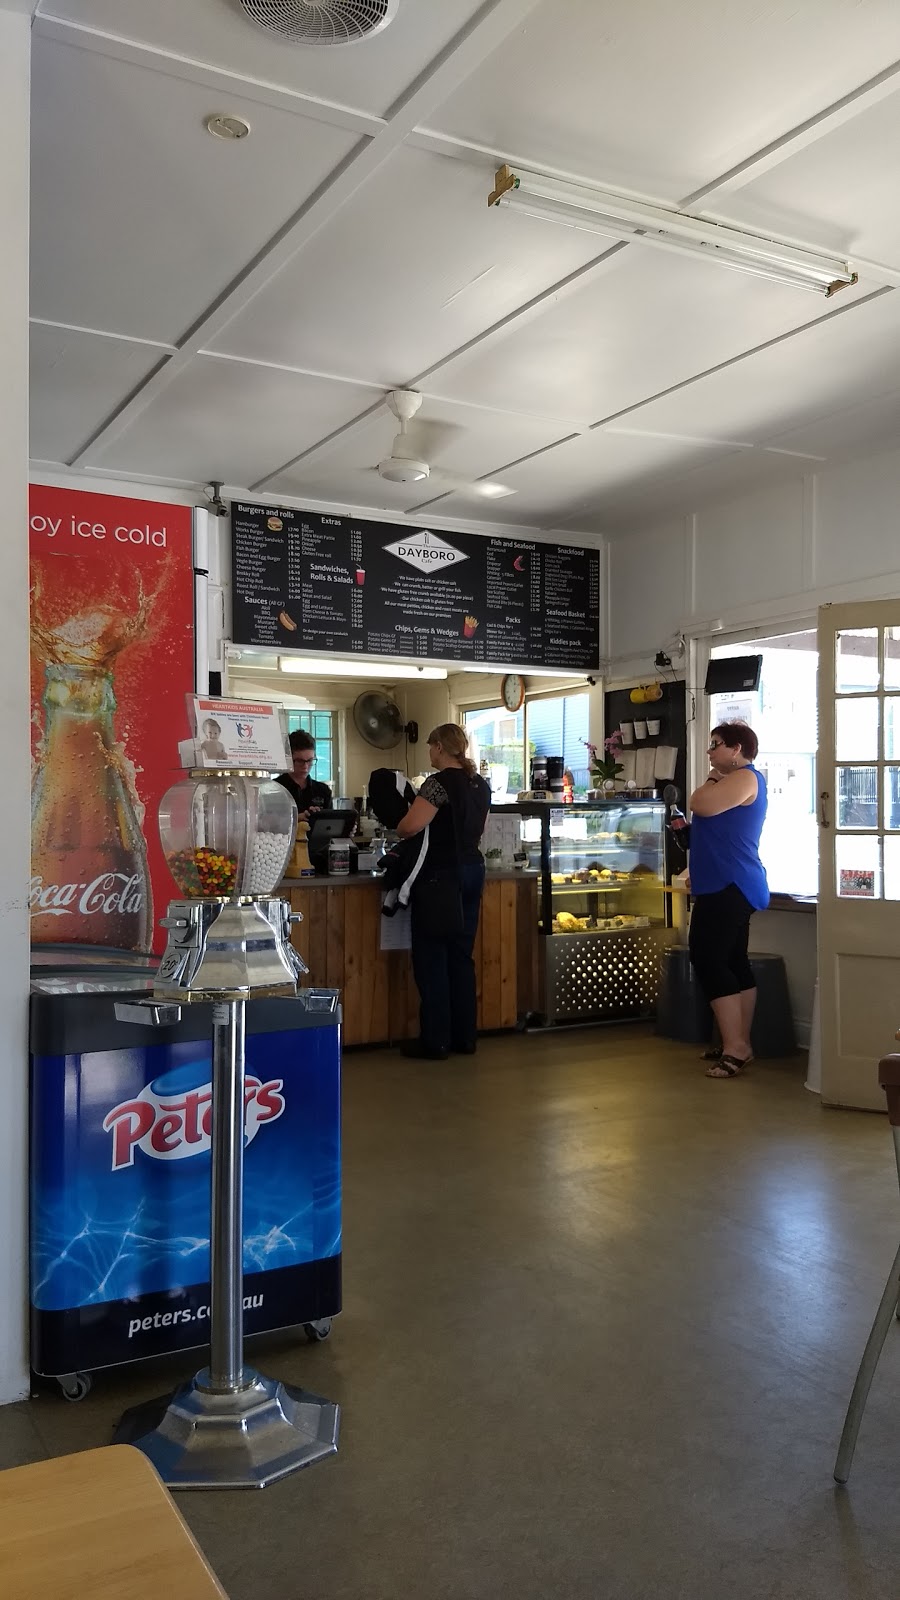 Dayboro Cafe | 6 Williams St, Dayboro QLD 4521, Australia | Phone: (07) 3425 2662